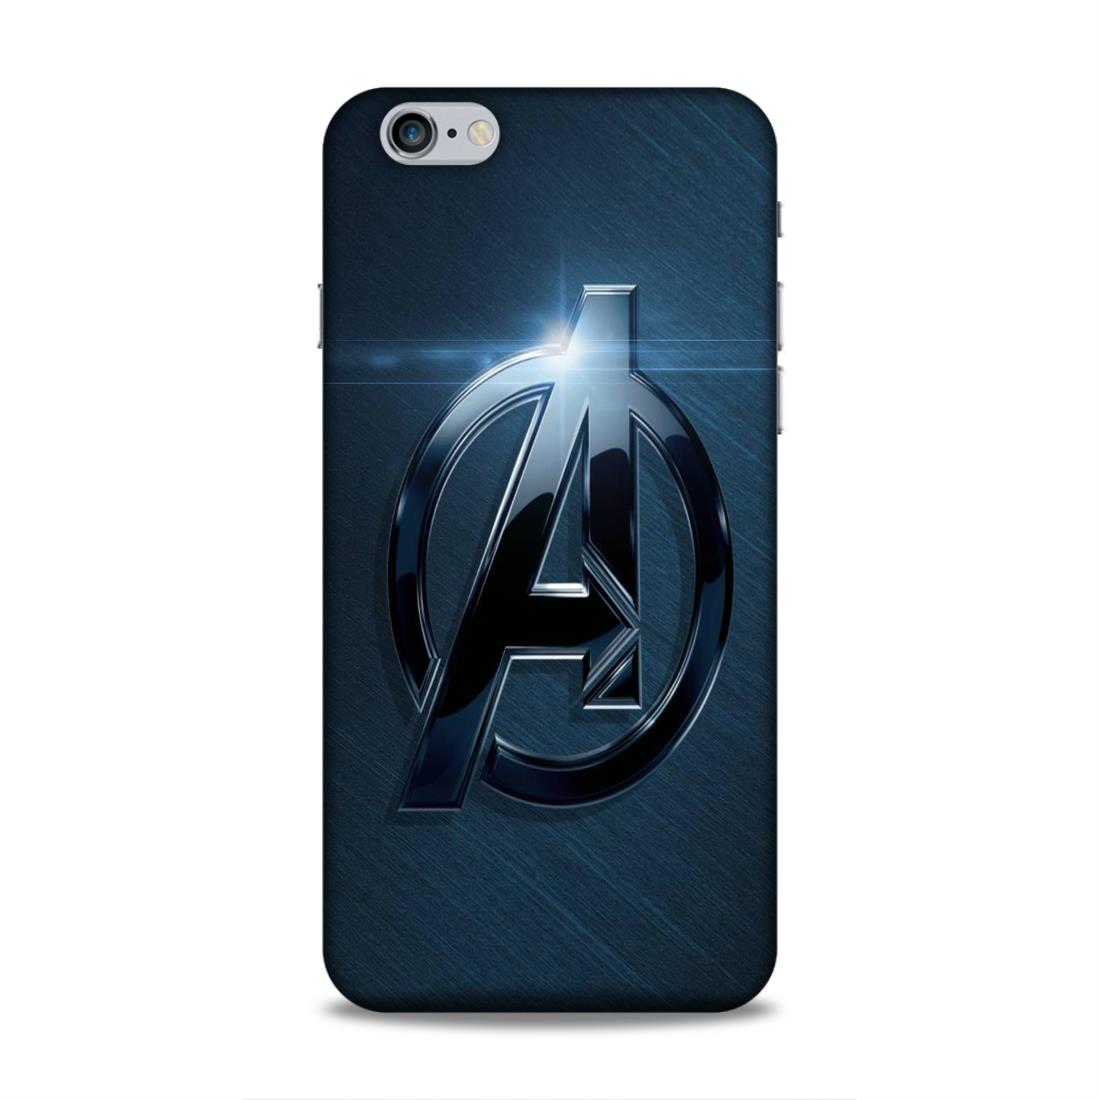 Avengers Hard Back Case For Apple iPhone 6 Plus / 6s Plus